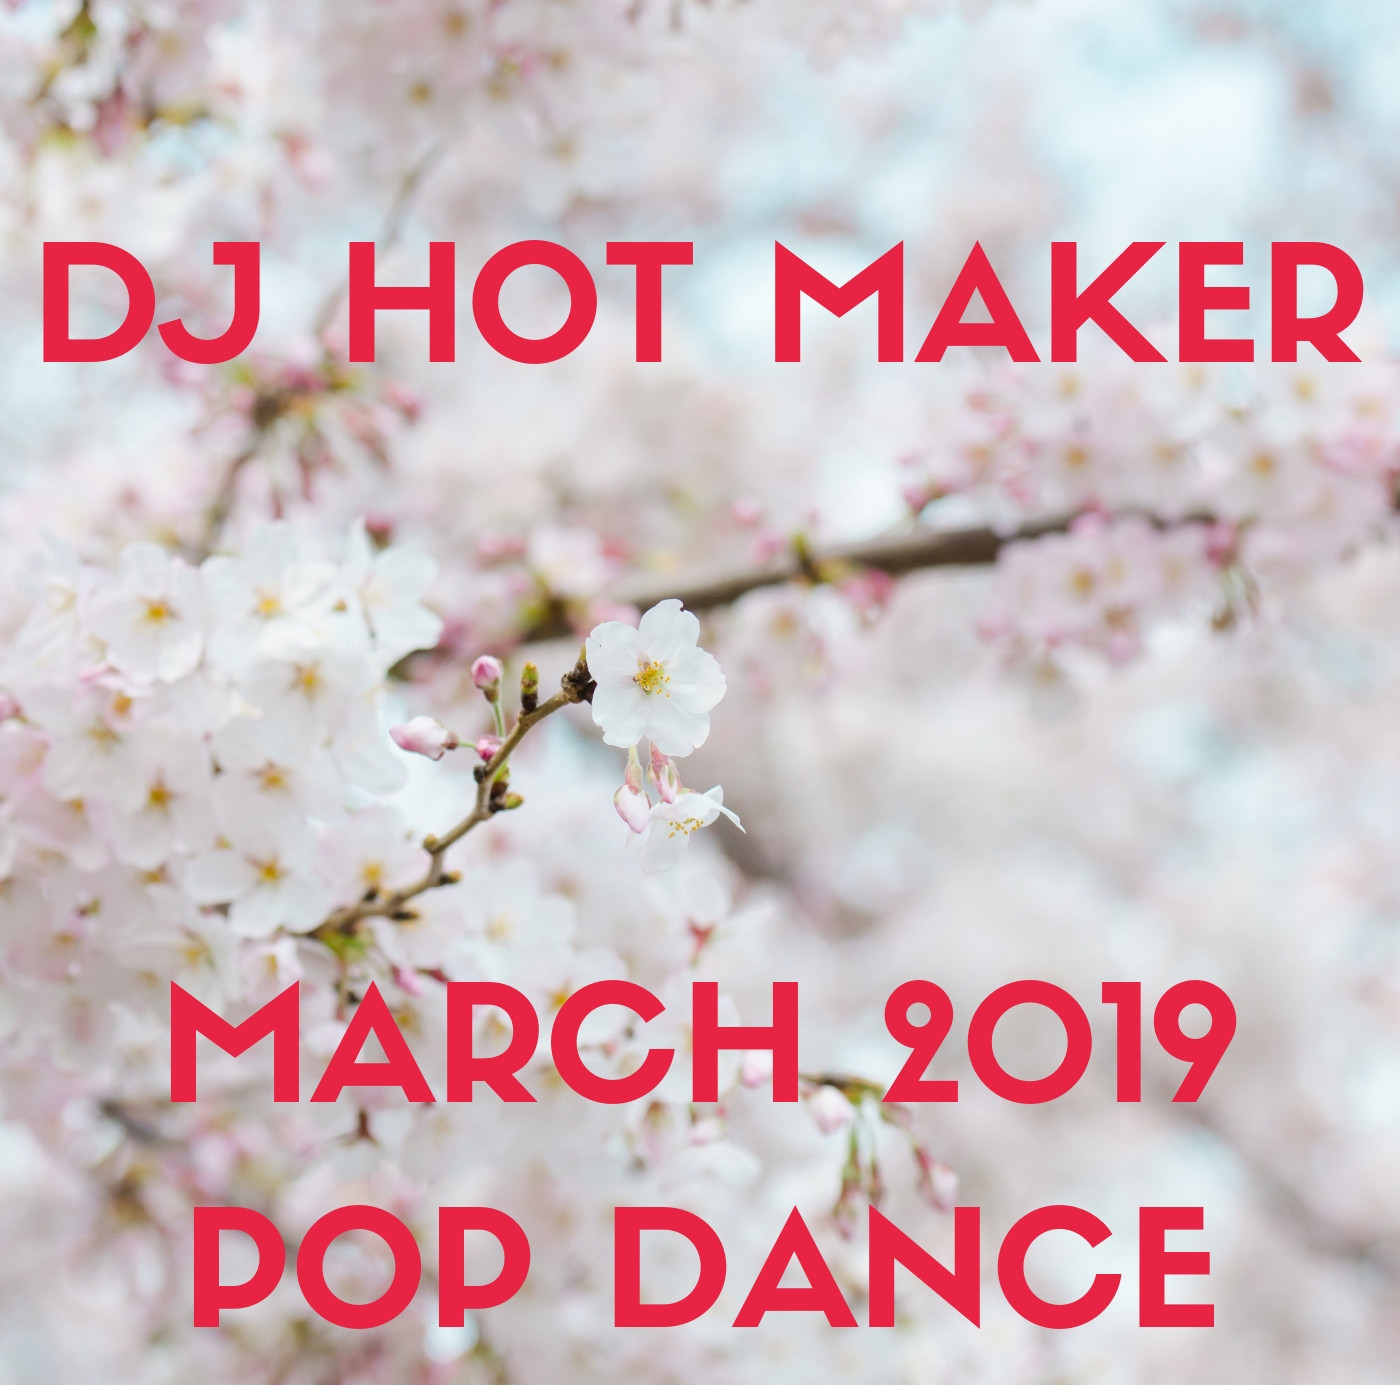 DJ Hot Maker - March 2019 Pop Dance Promo